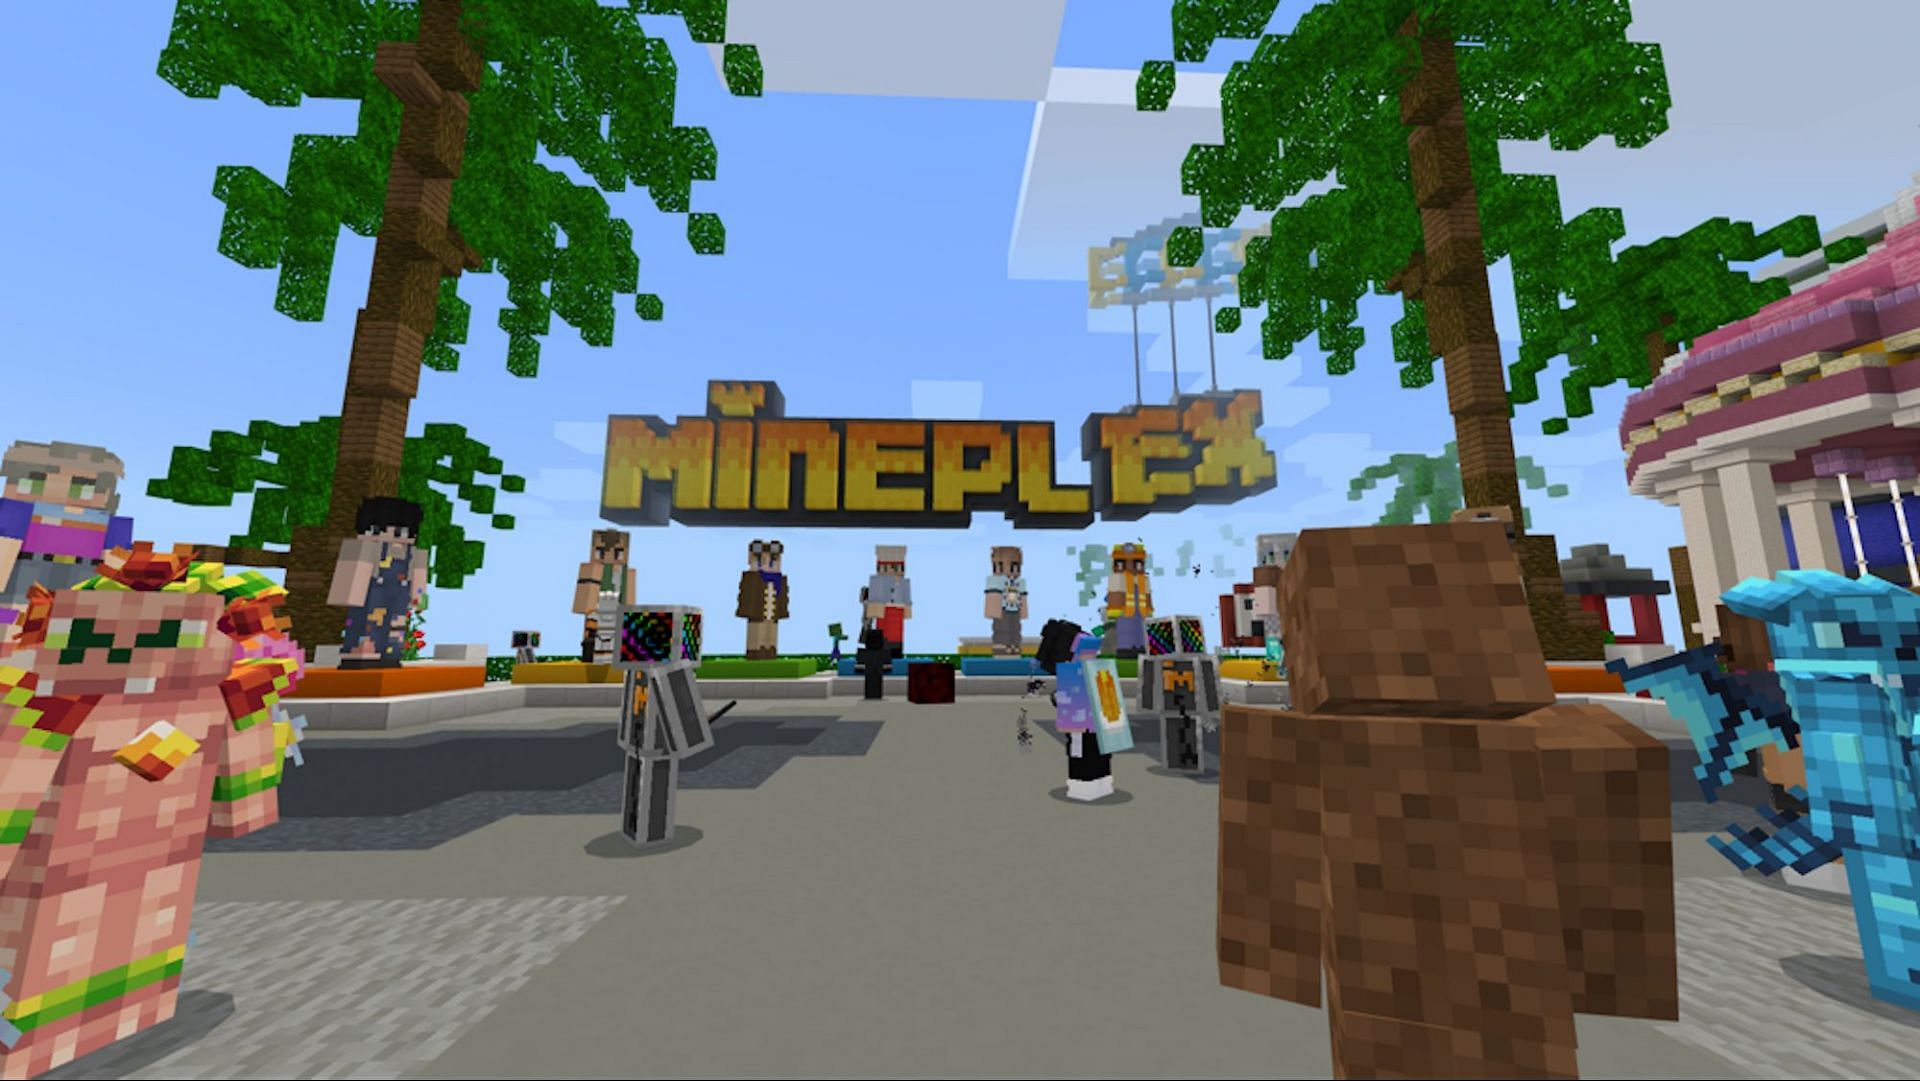 Mineplex (Image via Minecraft)